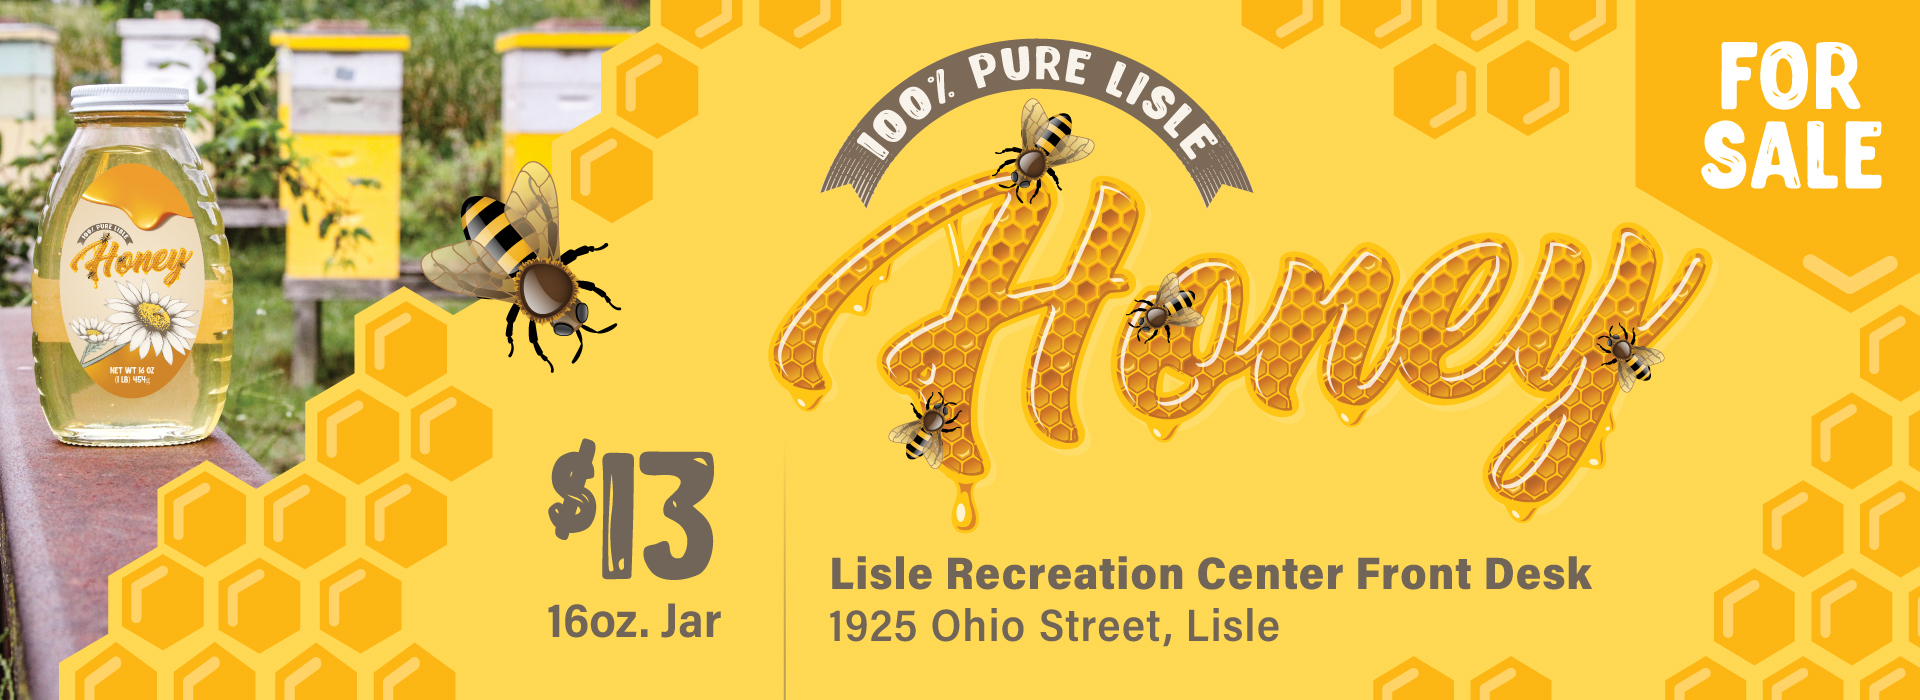 Lisle Pure Honey for Sale